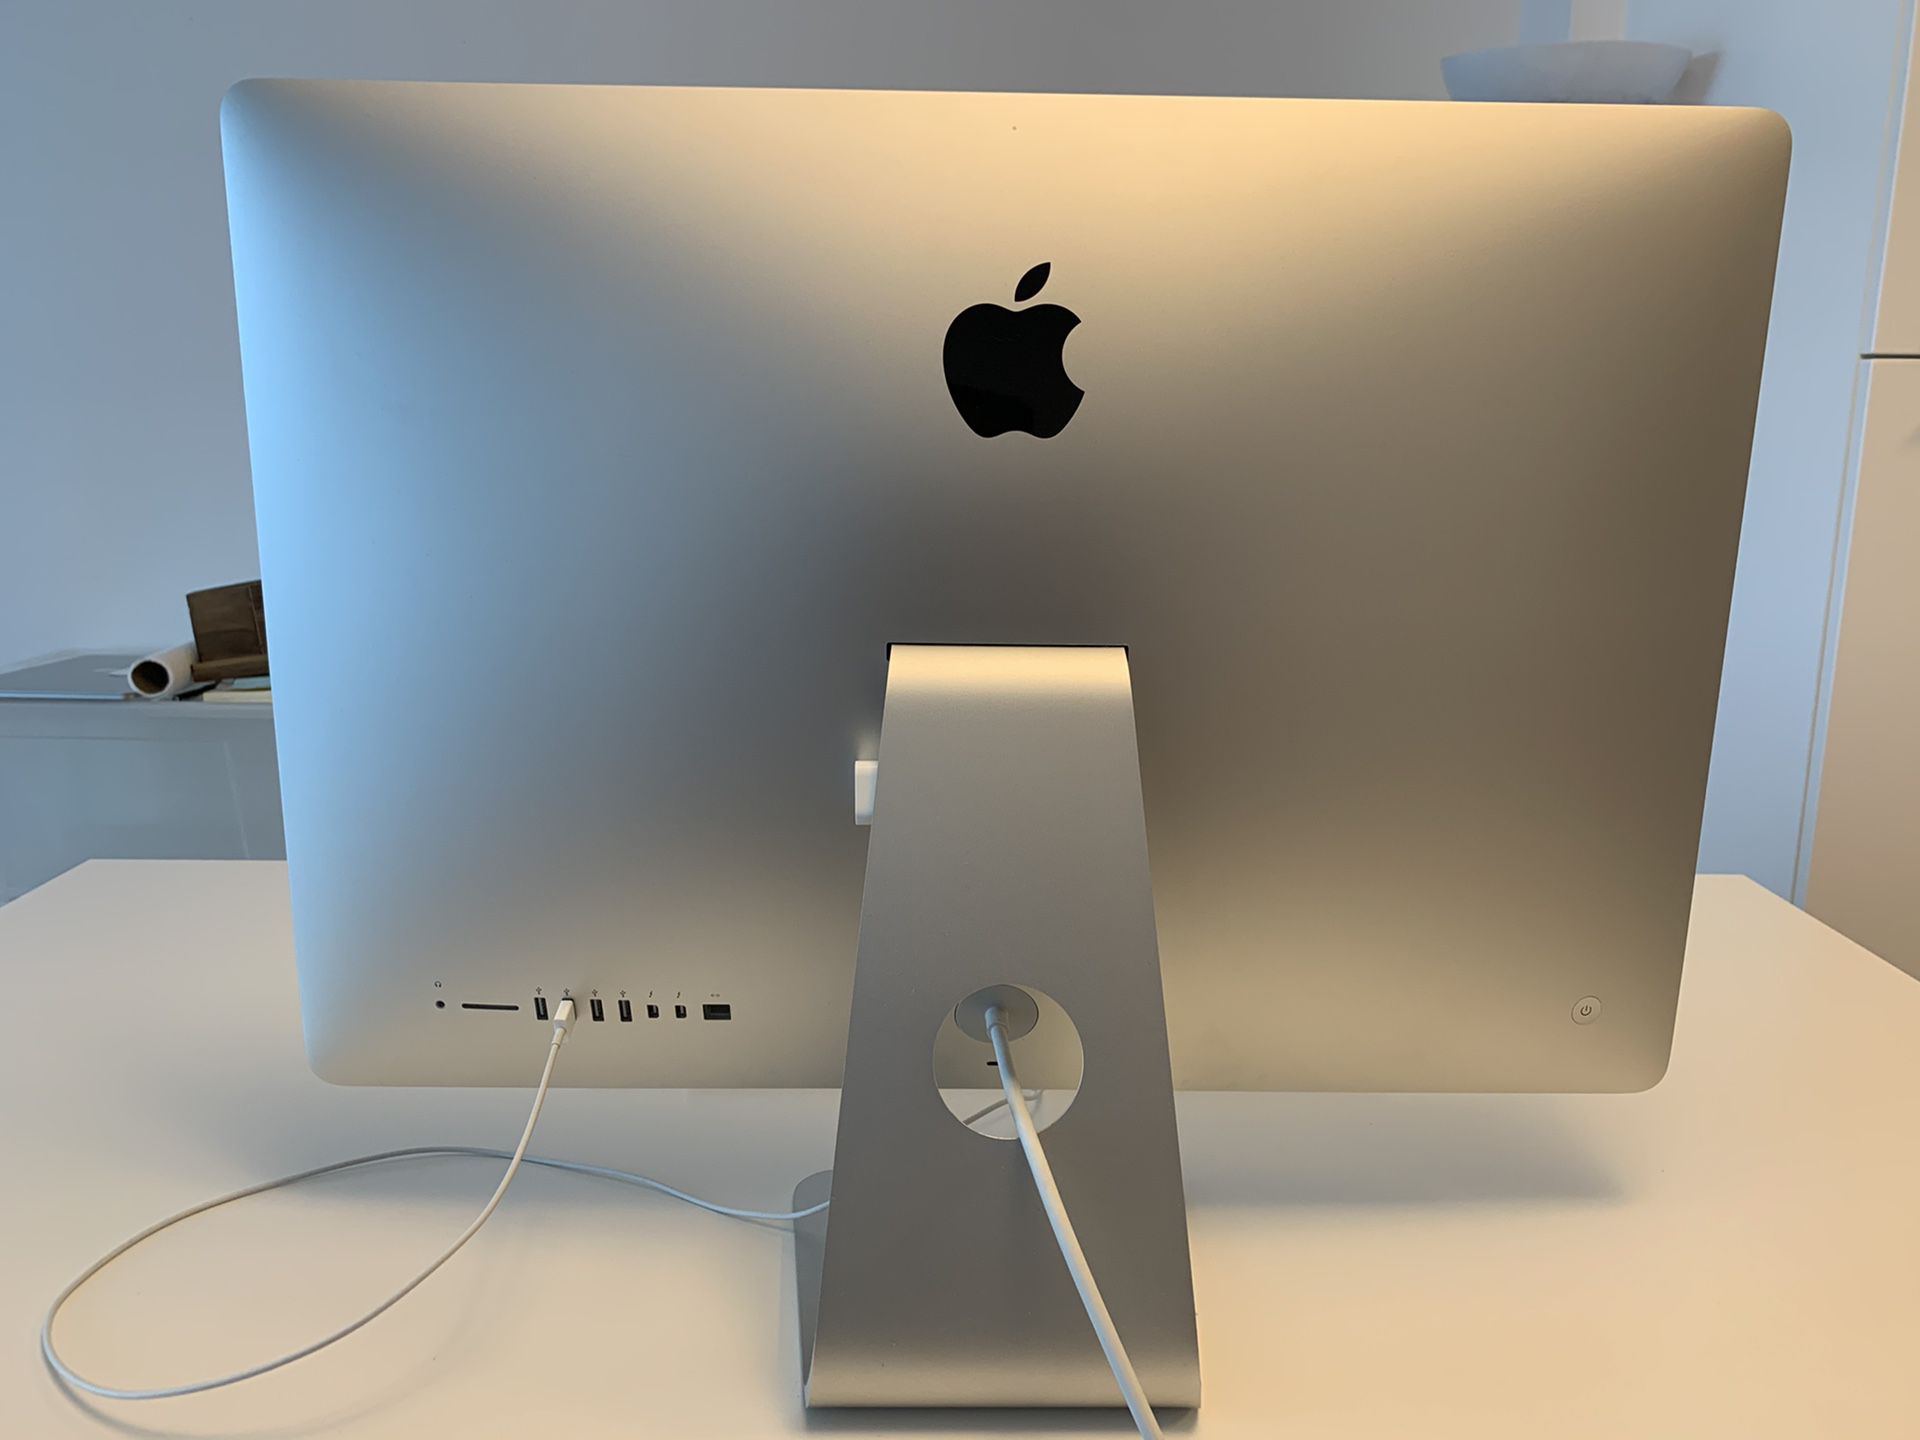 27” Apple iMac Desktop Computer - year 2013